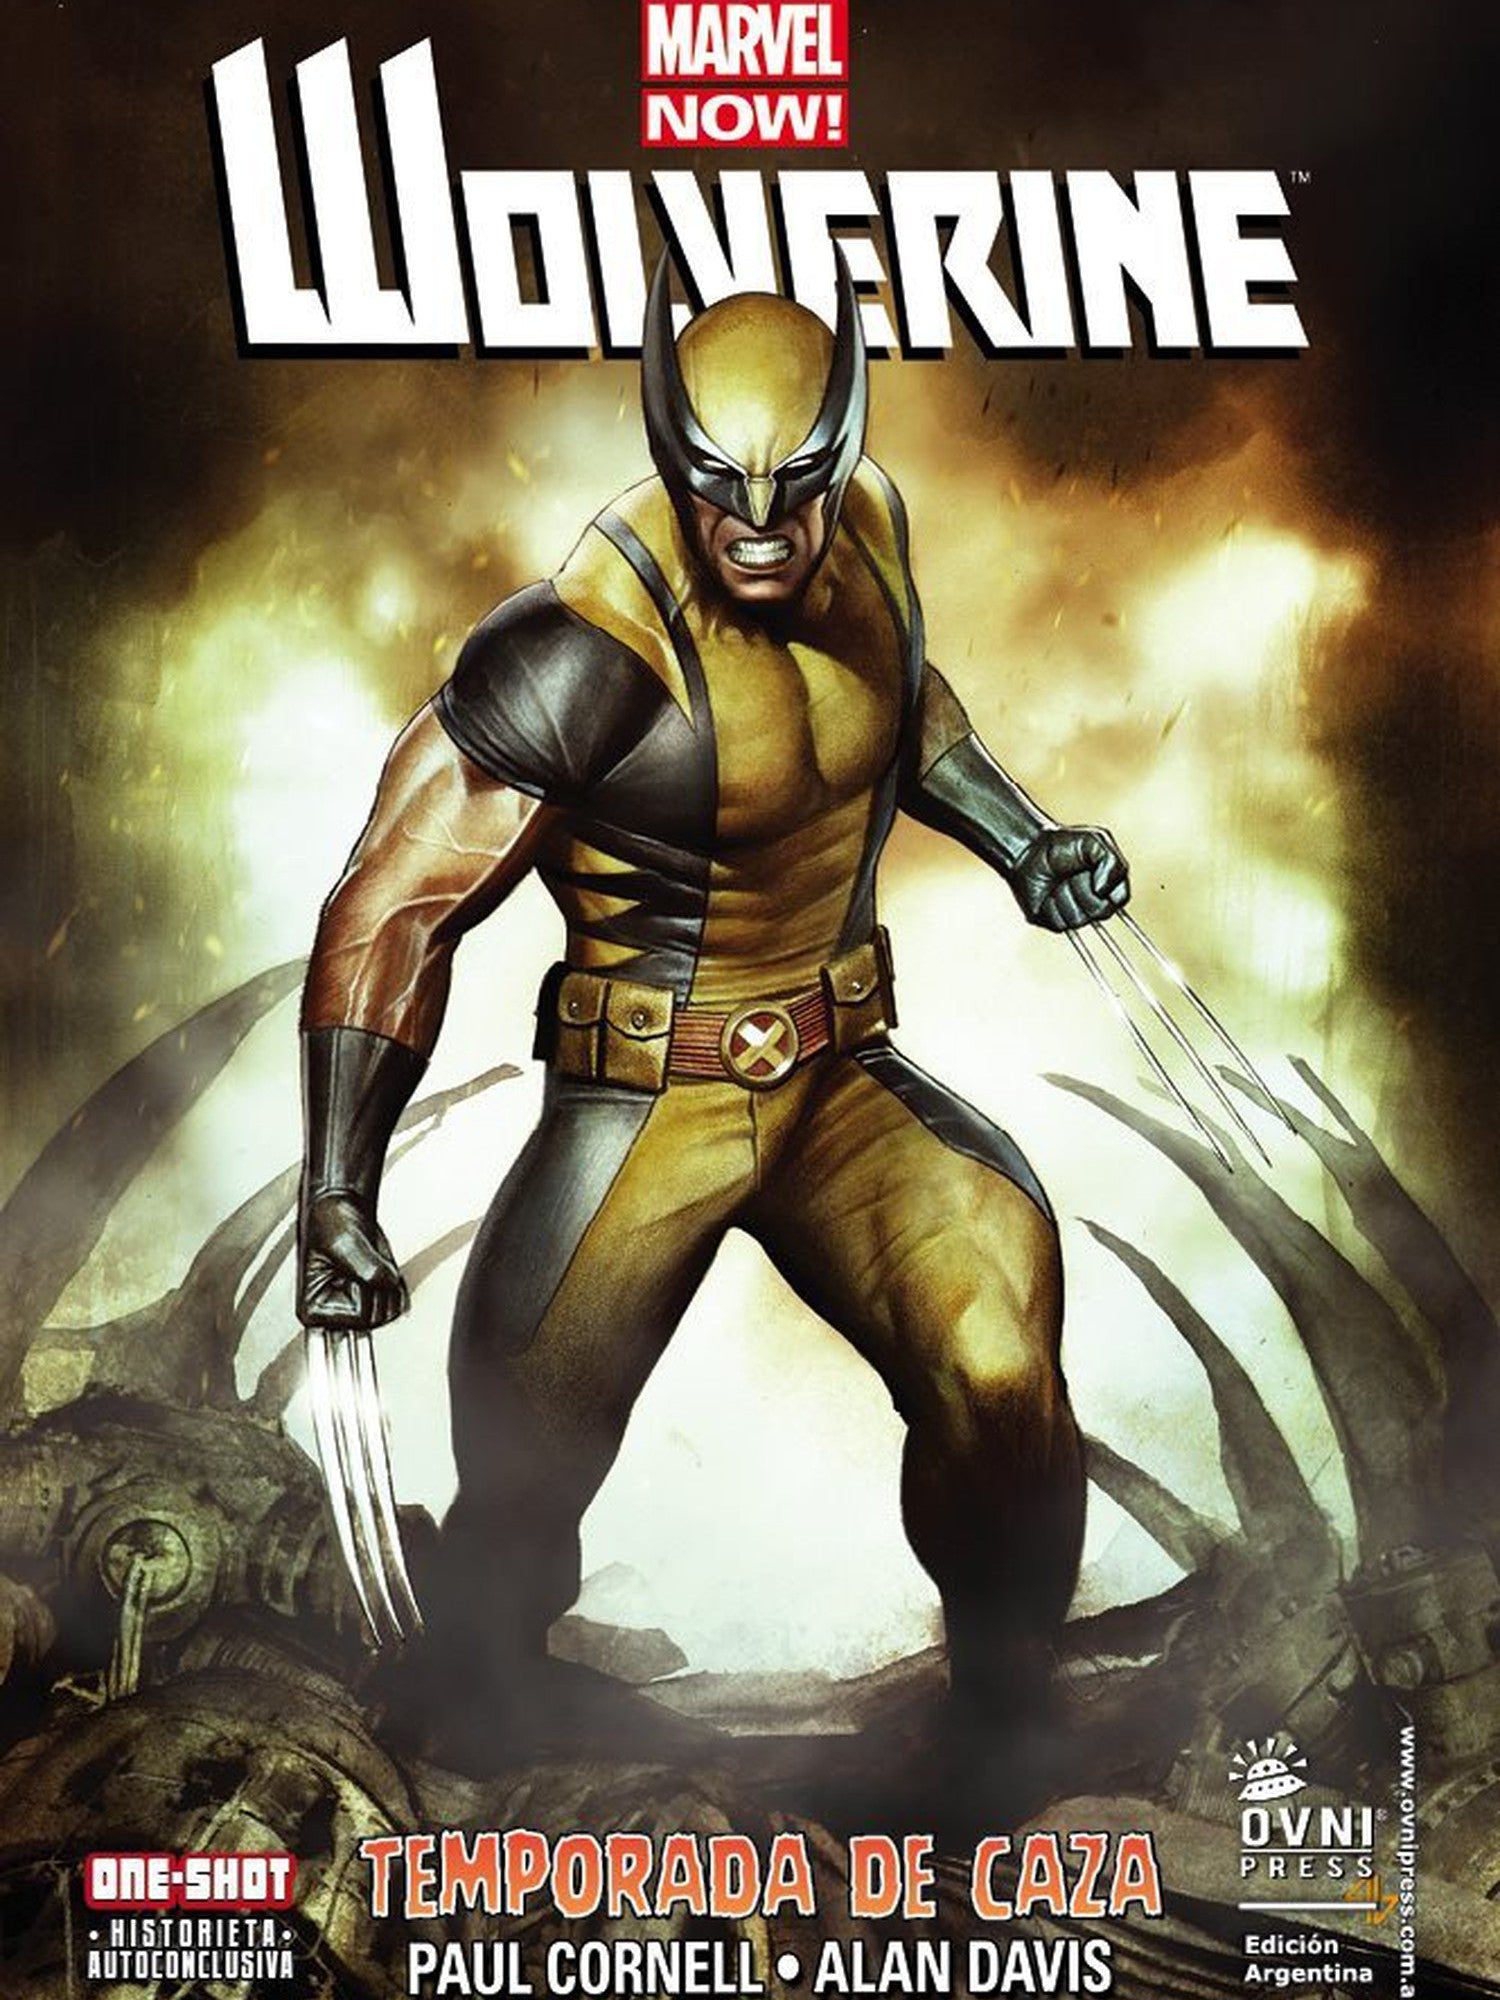 Wolverine: Temporada de Caza OVNI Press ENcuadrocomics